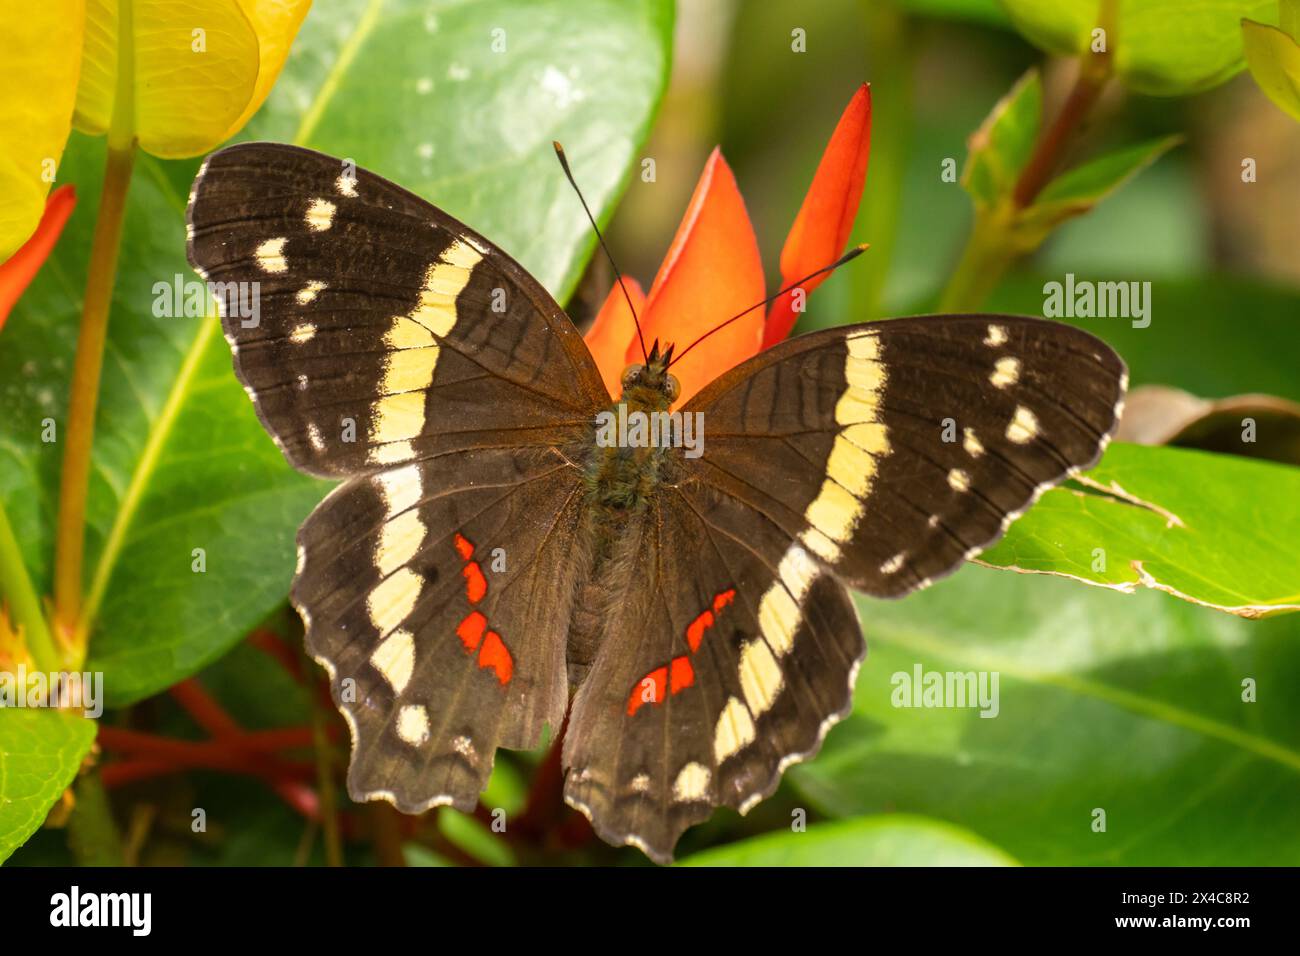 Costa Rica, Parque Nacional Carara. Banded peacock butterfly close-up. Stock Photo